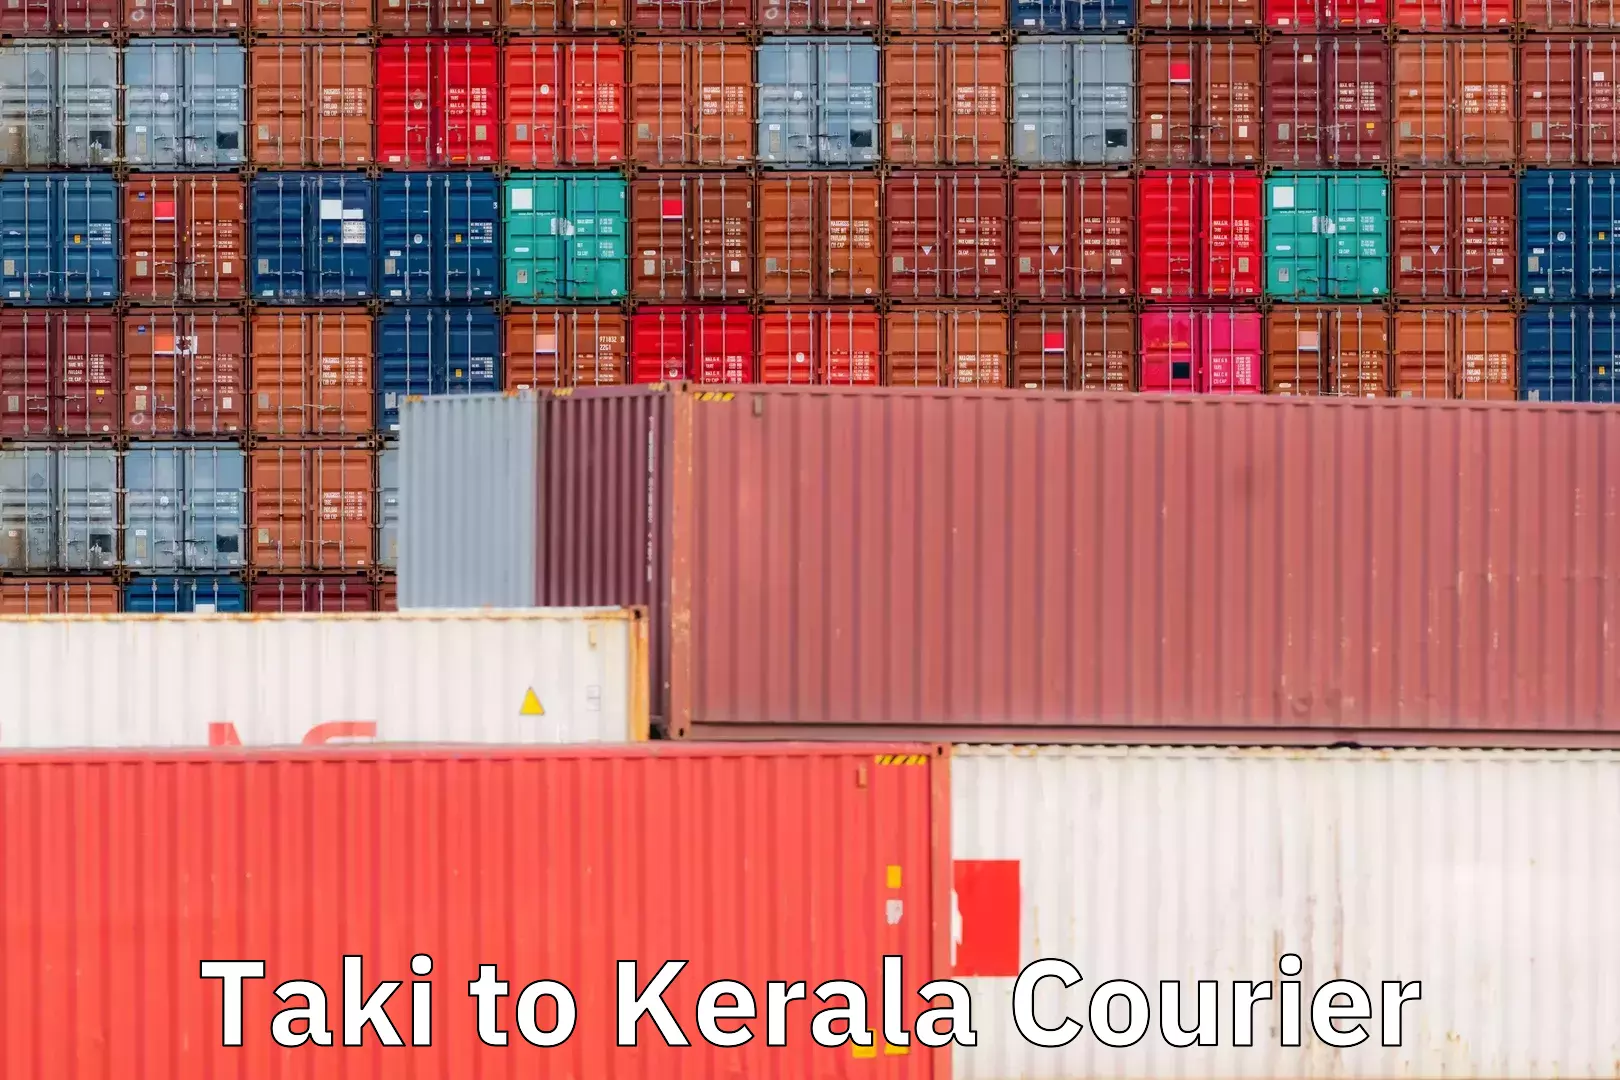 Customer-focused courier Taki to Kerala